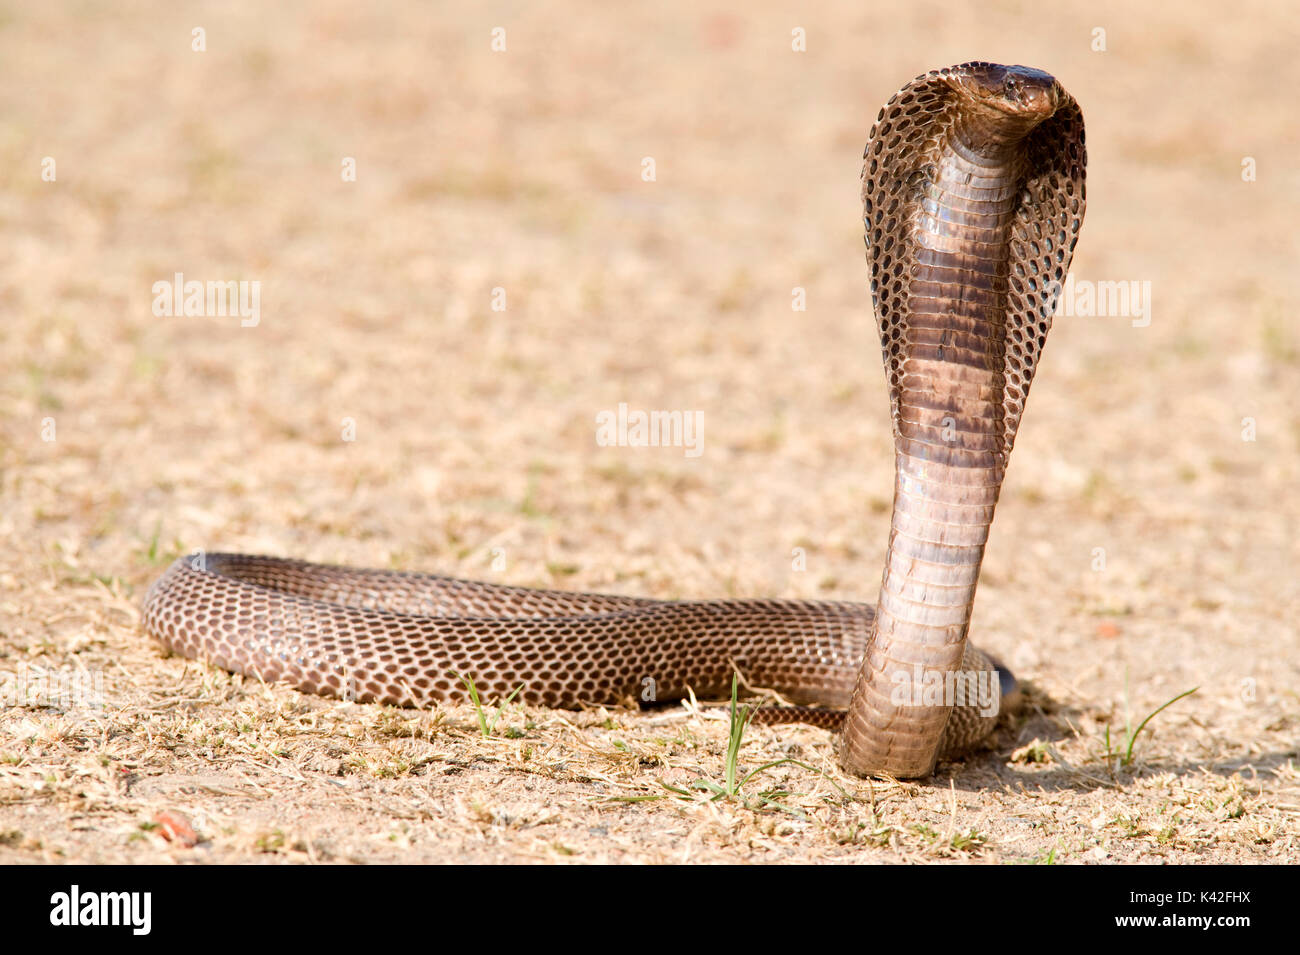 La cobra egipcia, Naja haje, utilizado para mostrar domador de serpientes, criados con capucha, Rann de Kutch, Gujarat, India Foto de stock